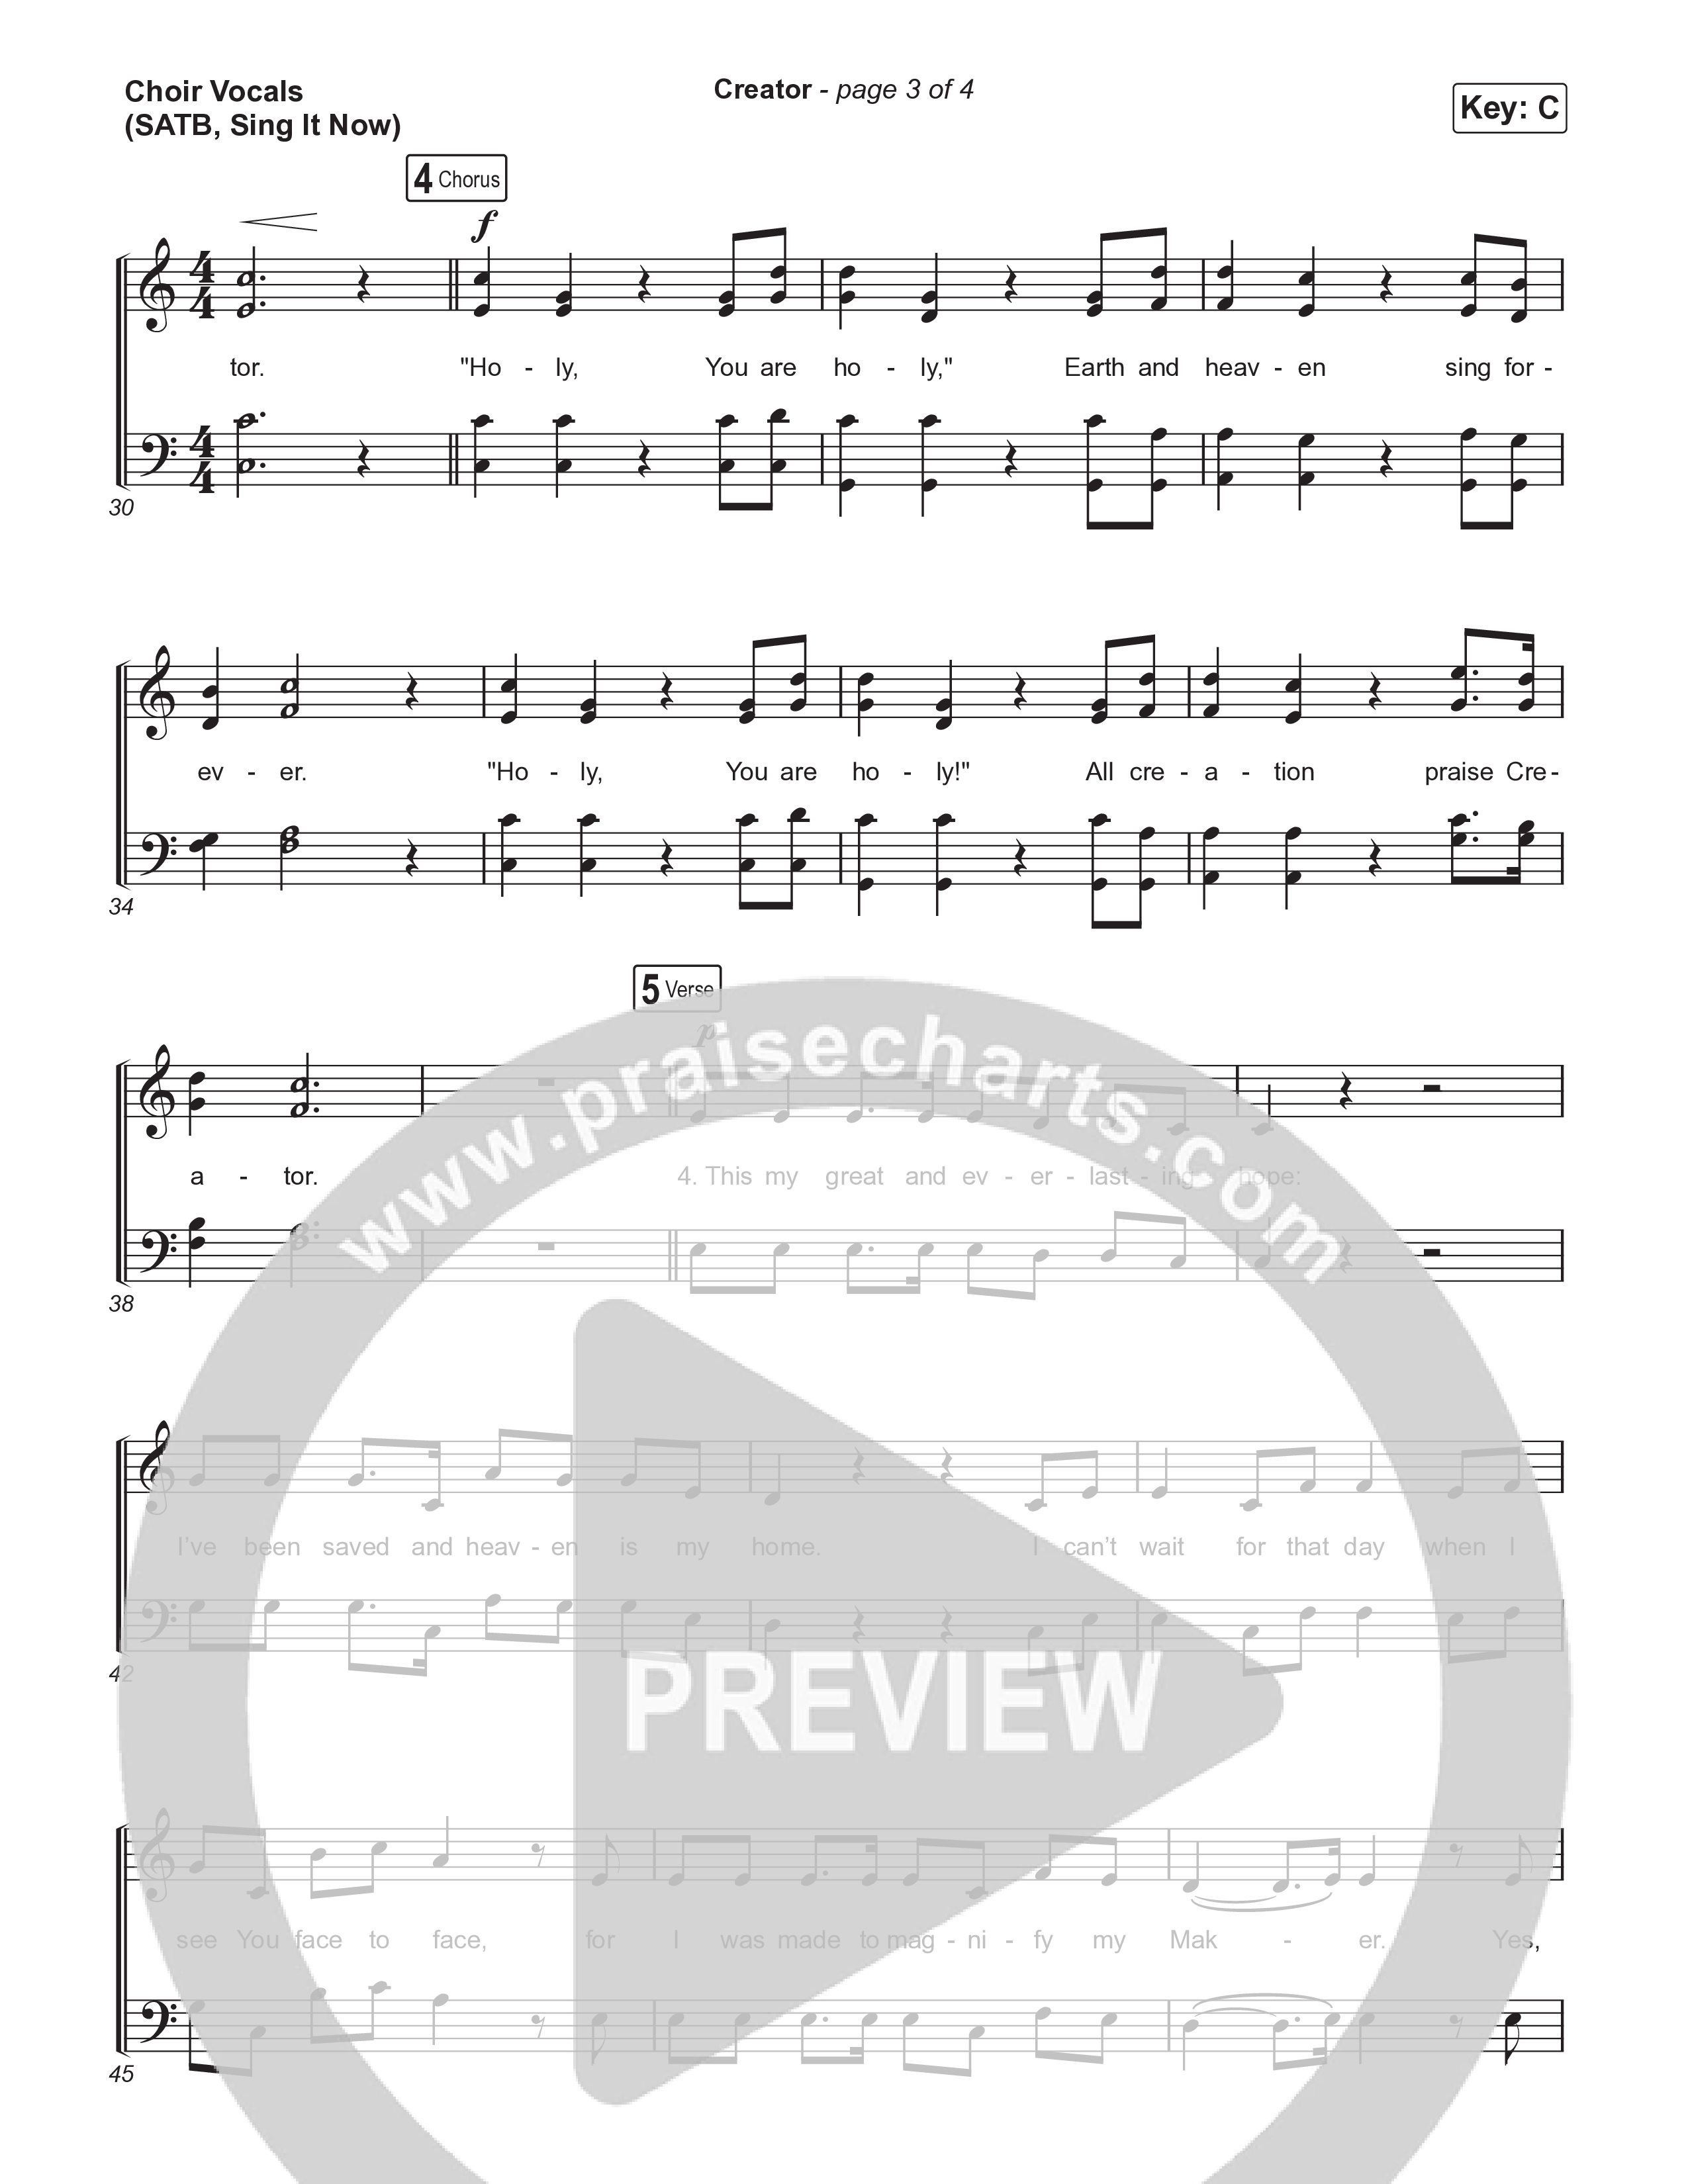 Creator (Sing It Now) Choir Sheet (SATB) (Phil Wickham)